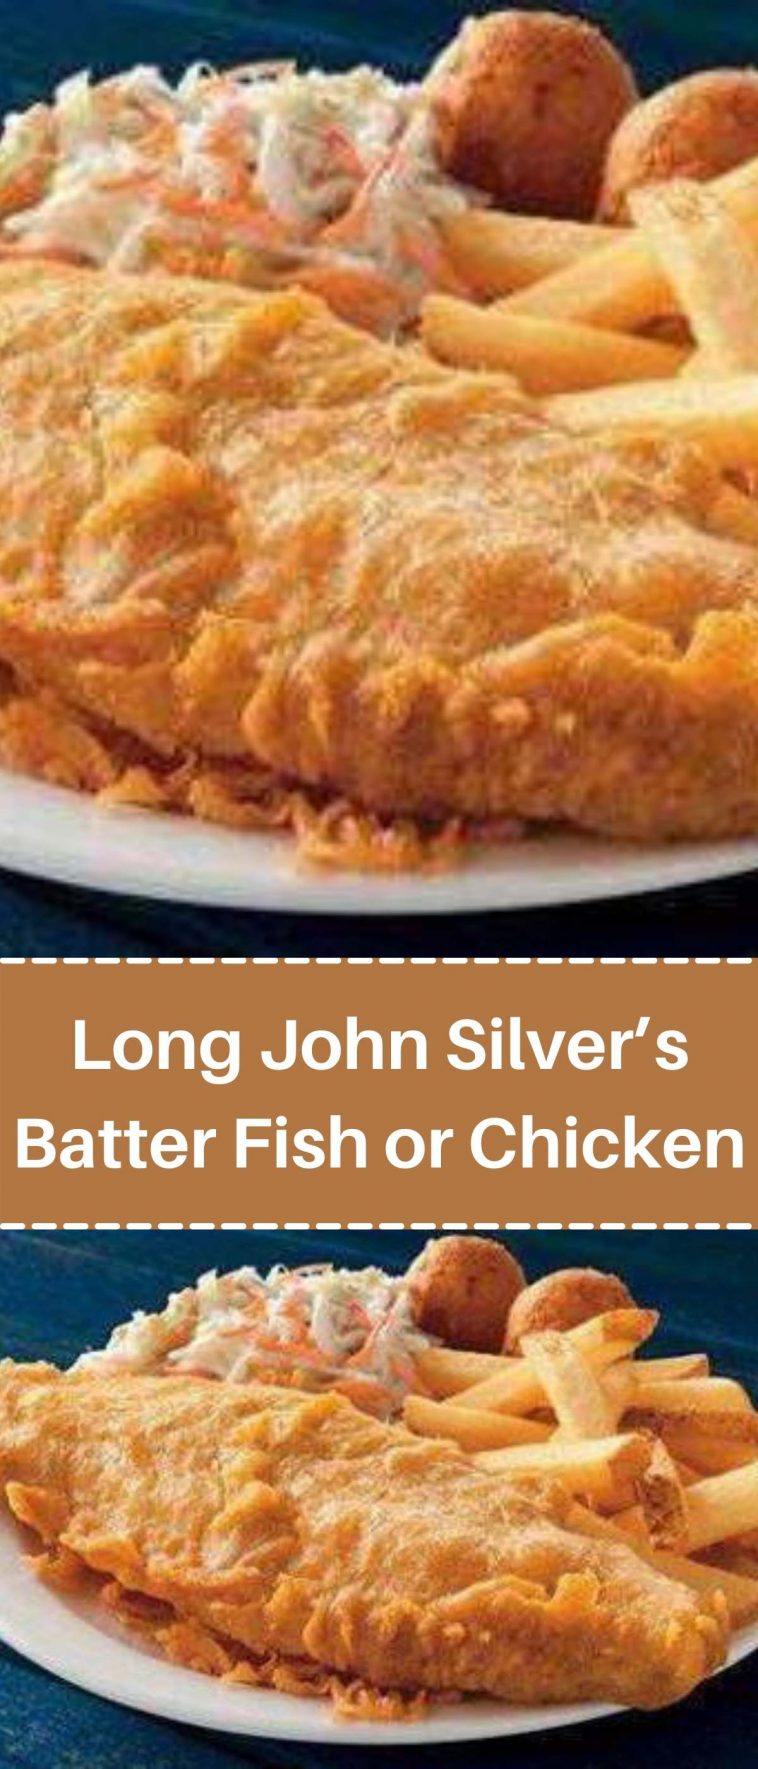 Long John Silver’s Batter Fish or Chicken